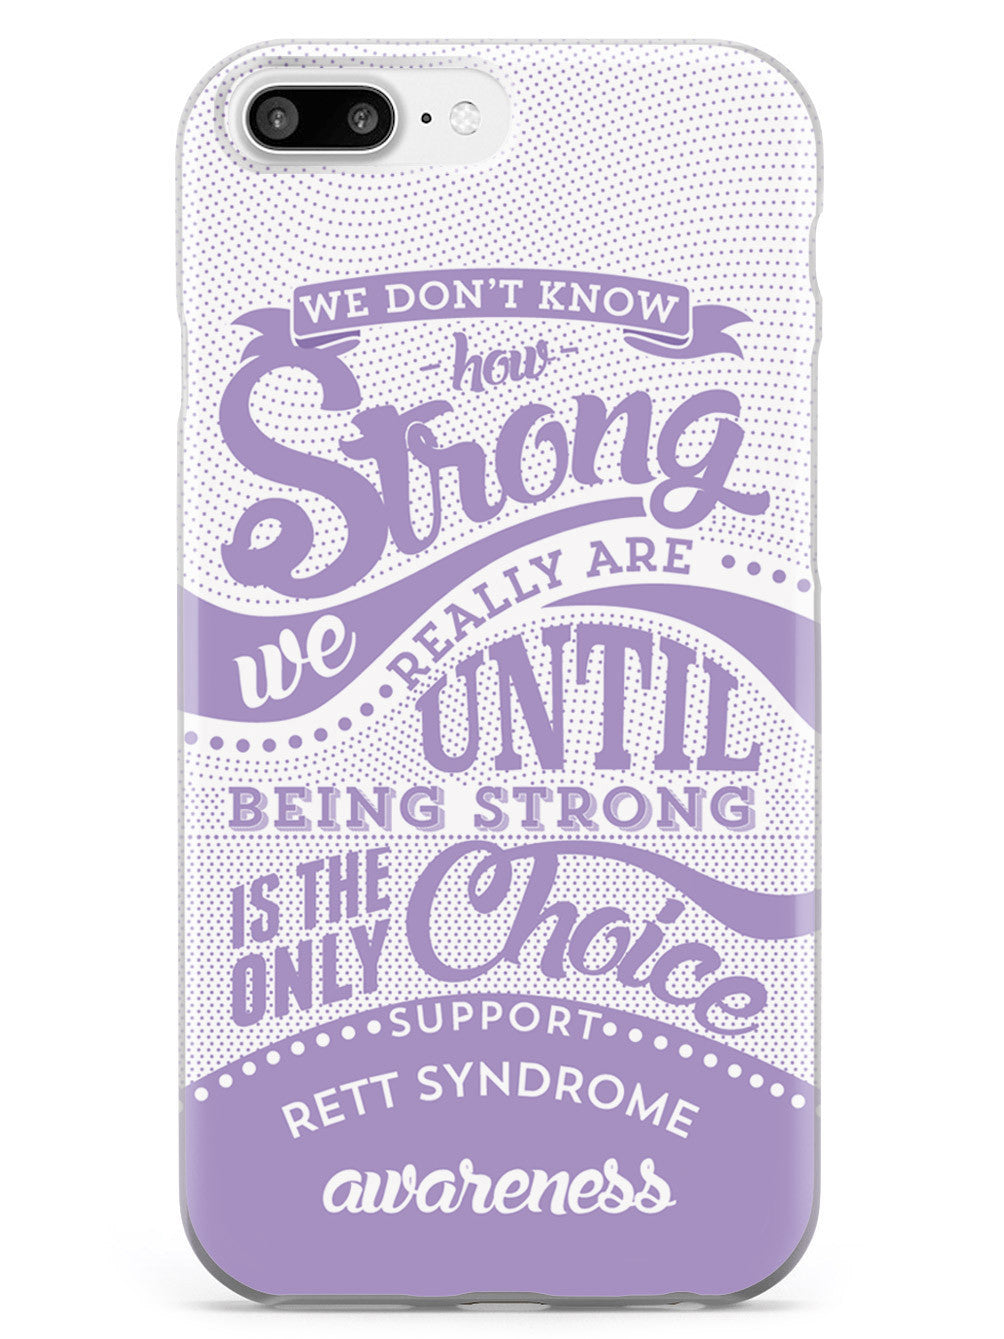 How Strong - Rett Syndrome Case